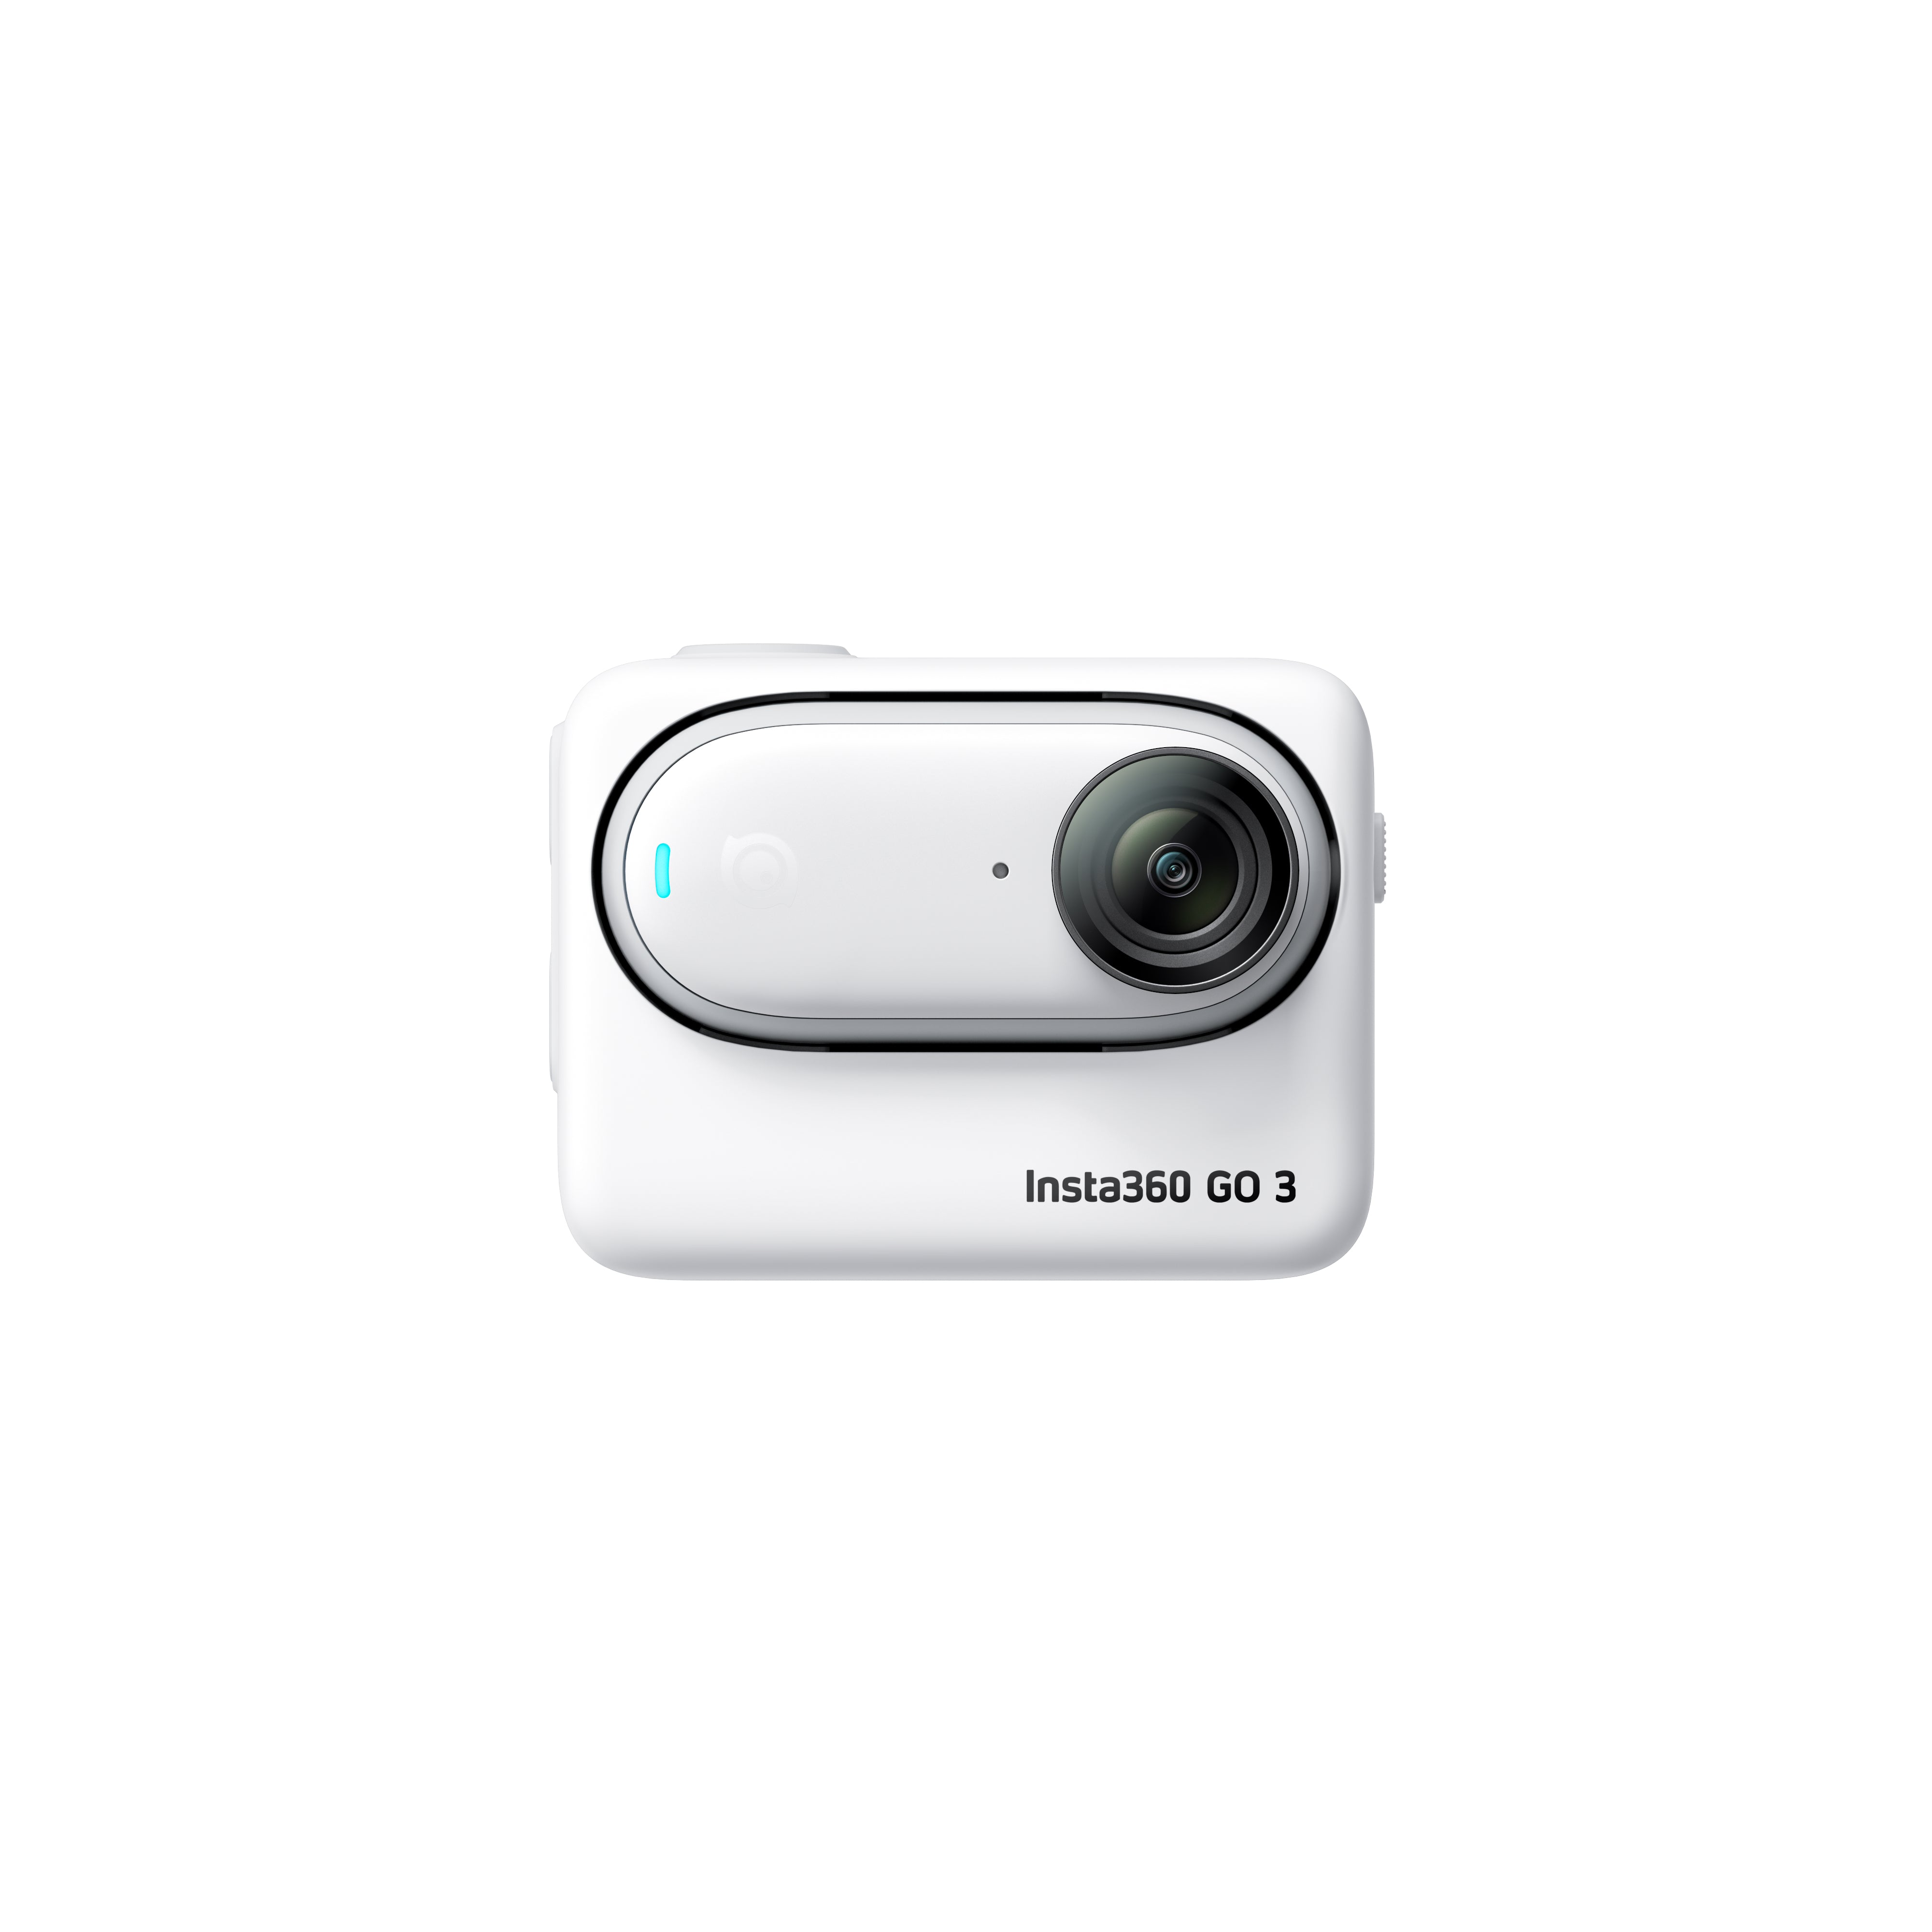 Insta360 GO 3 Action Camera - White - 128GB